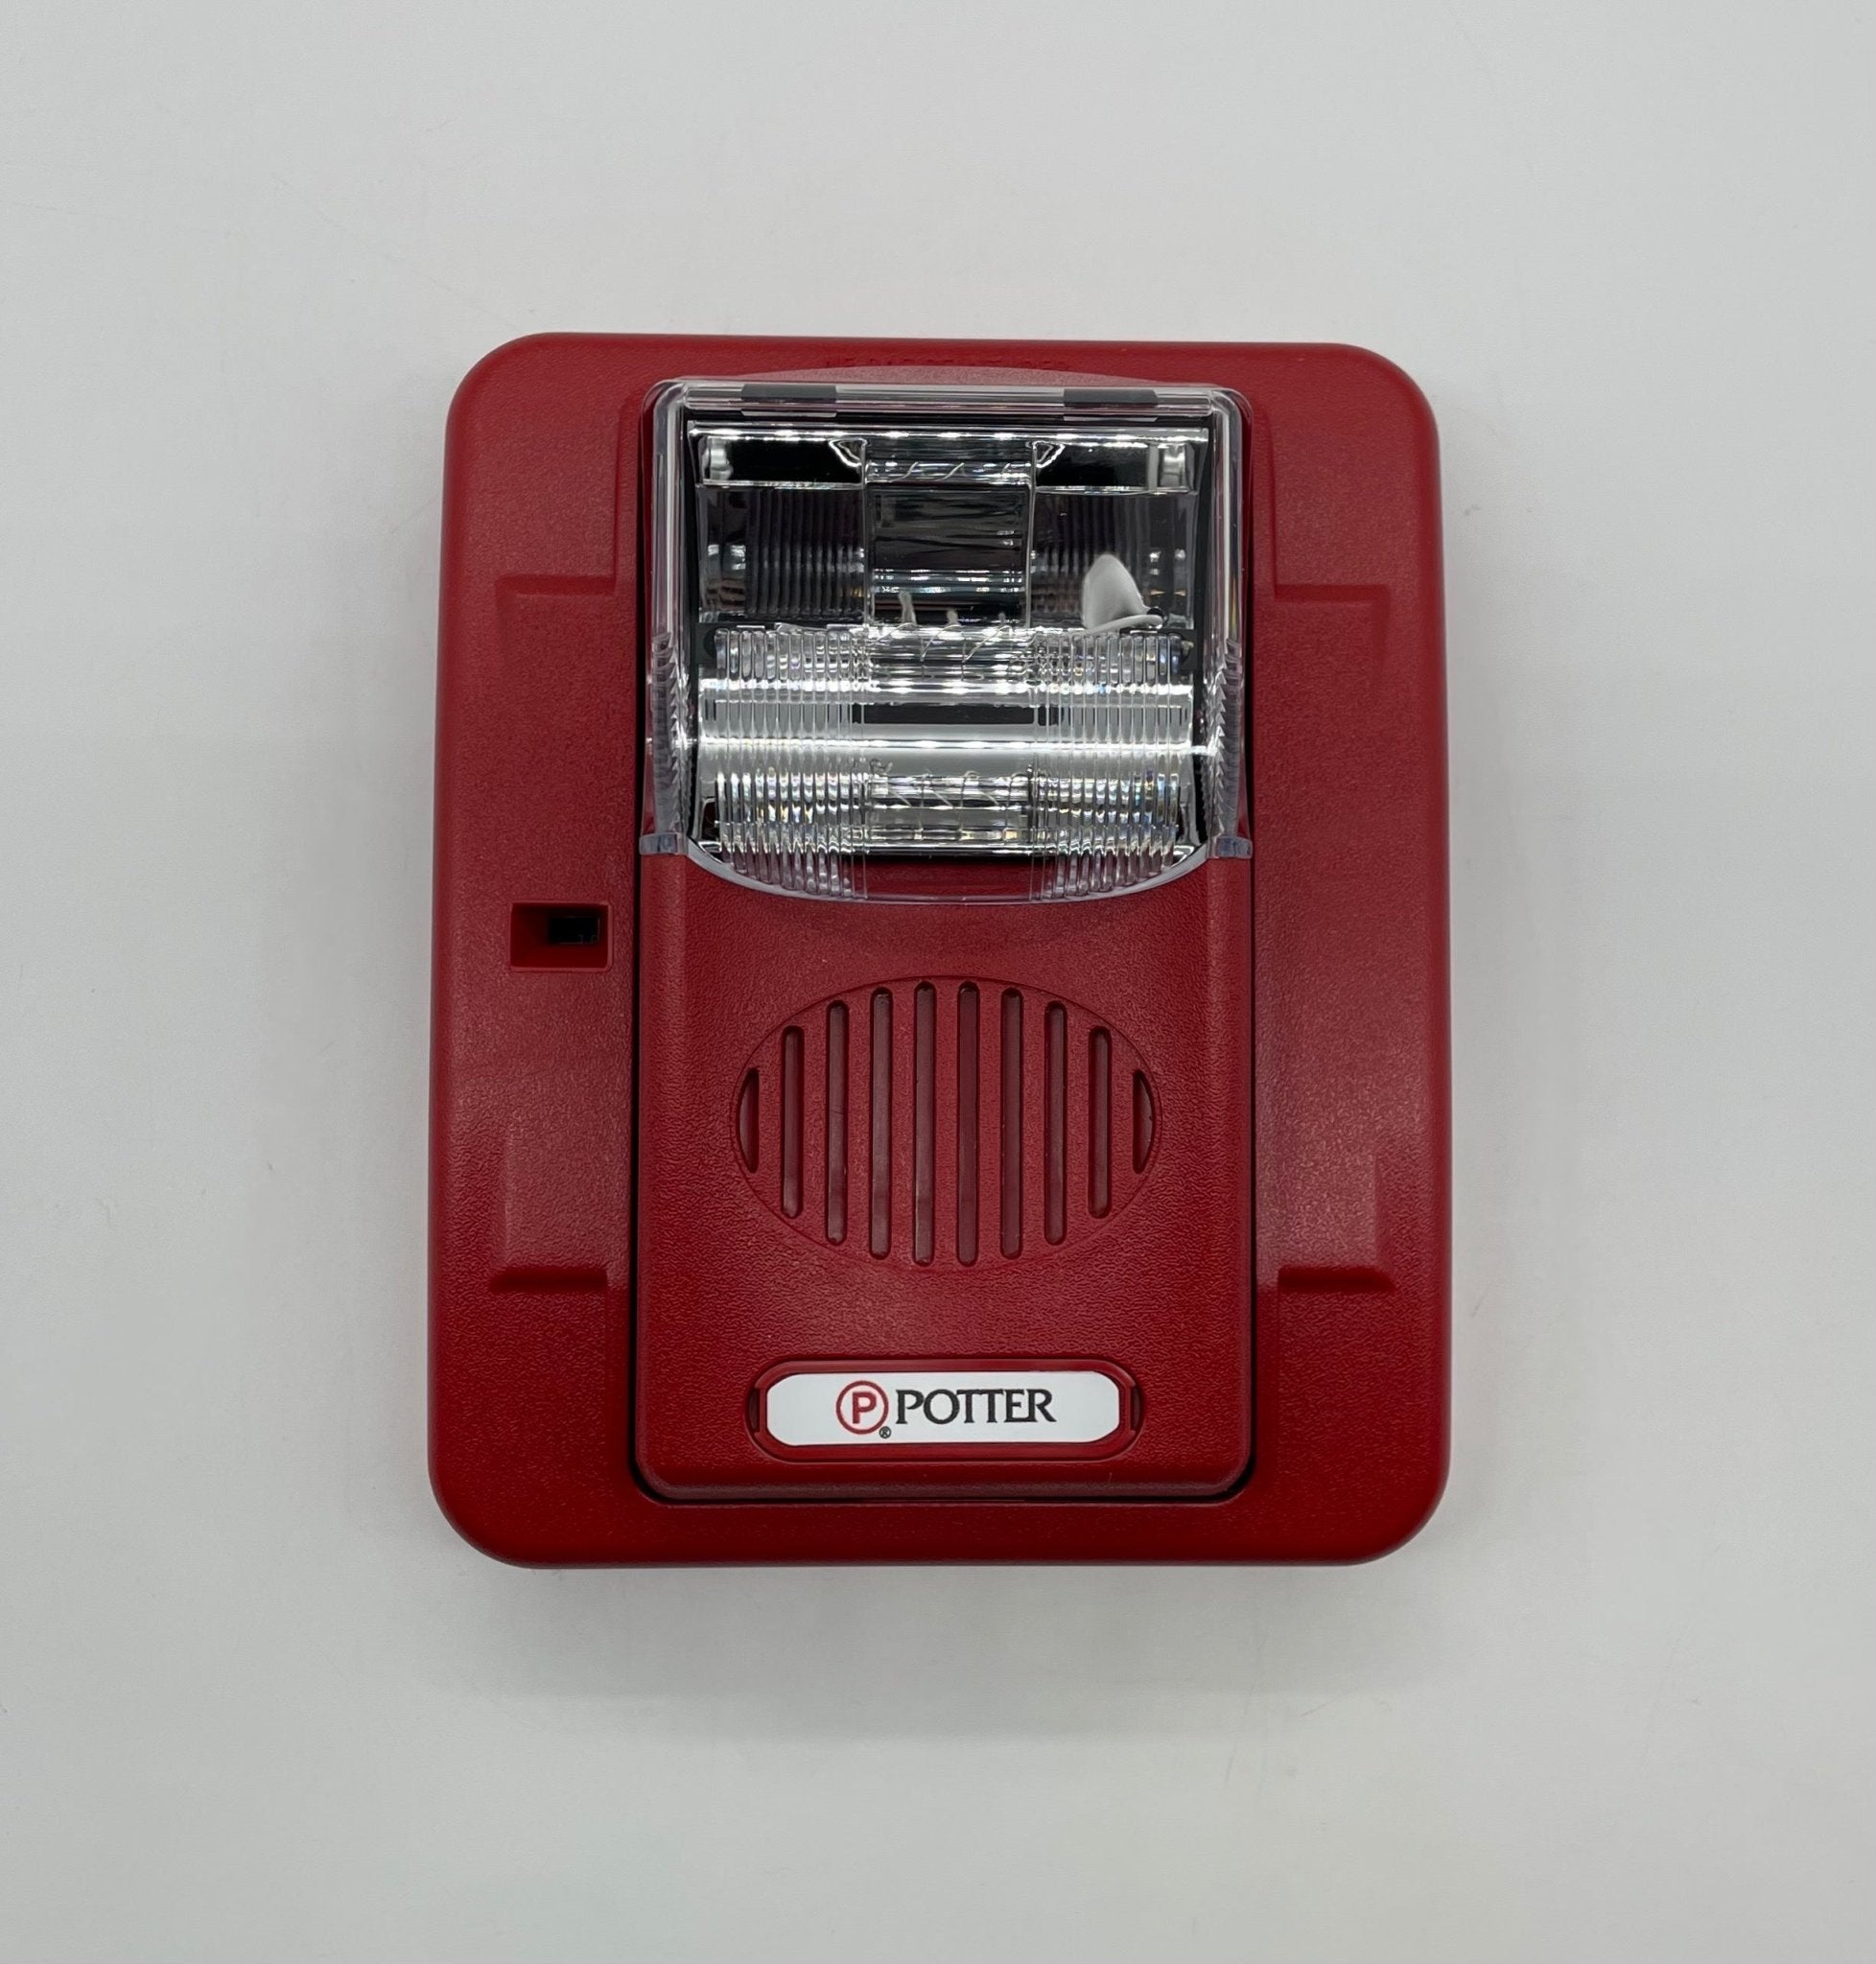 Potter HS-24WR - The Fire Alarm Supplier